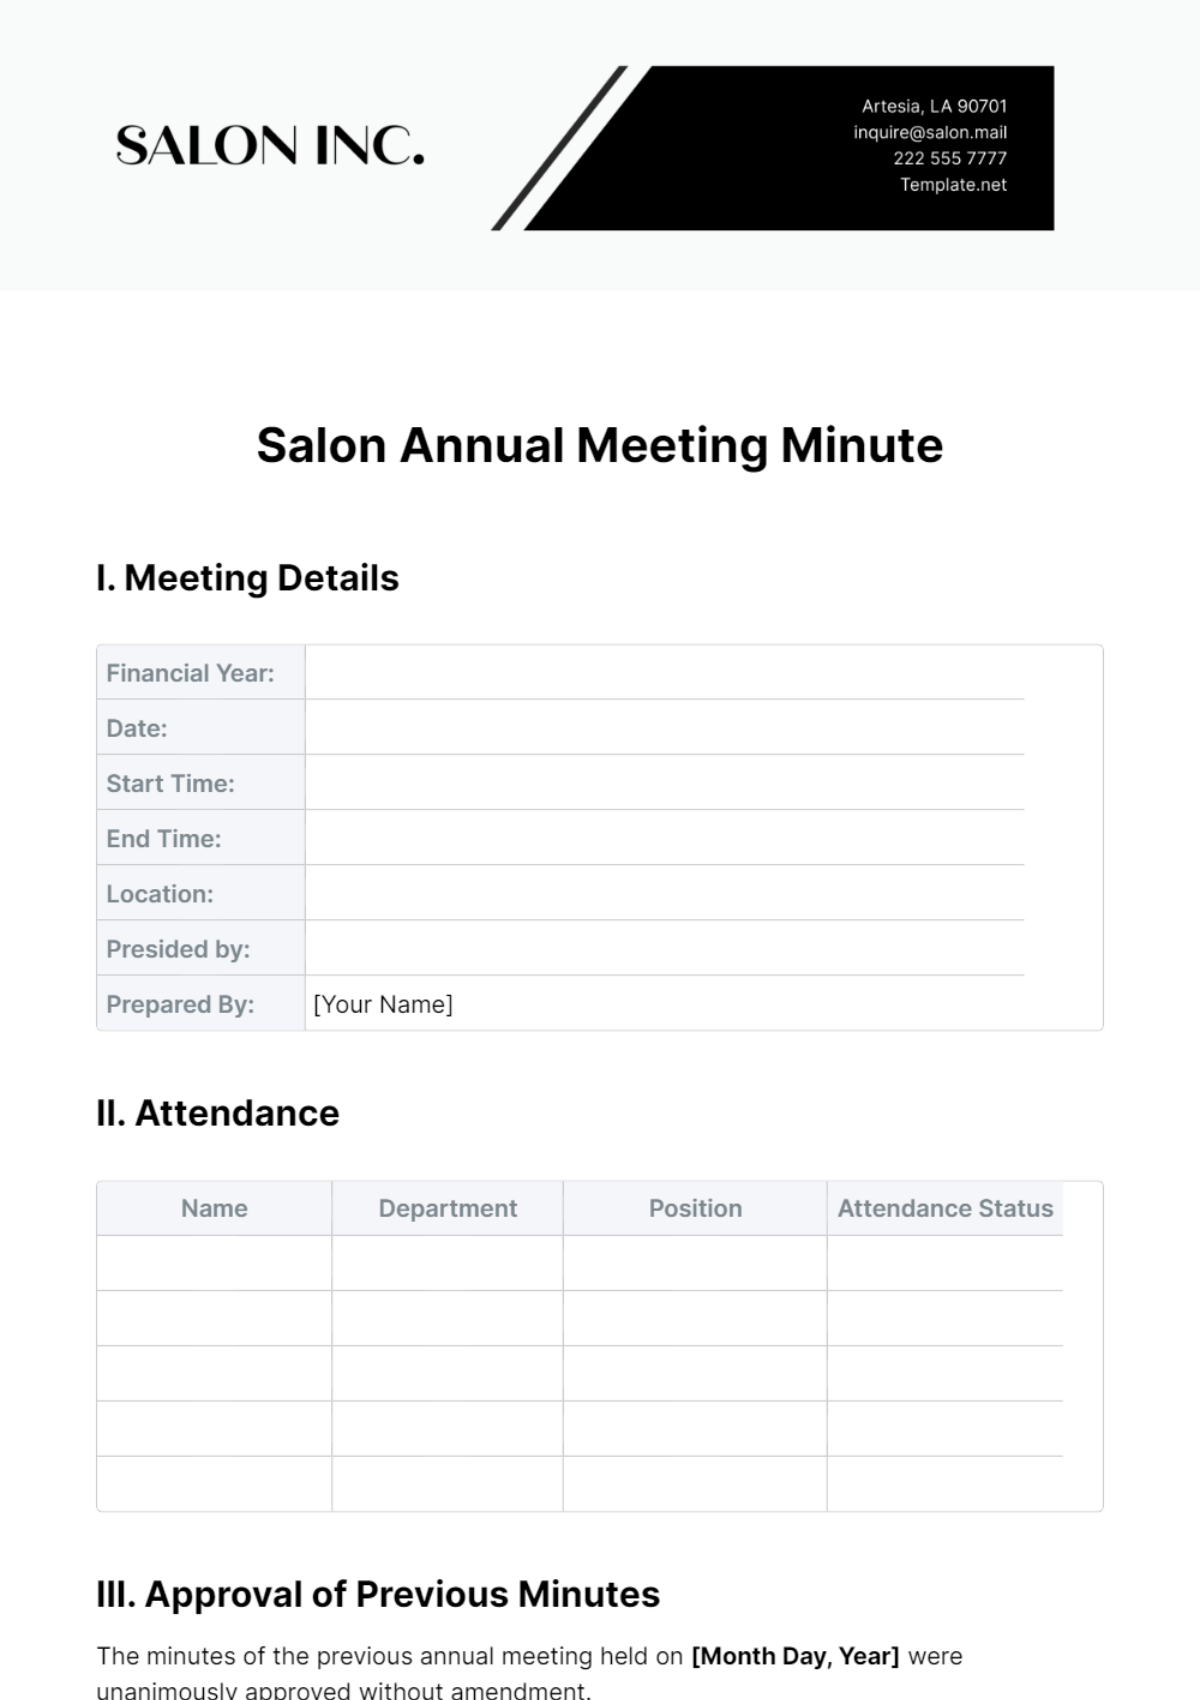 Salon Annual Meeting Minute Template